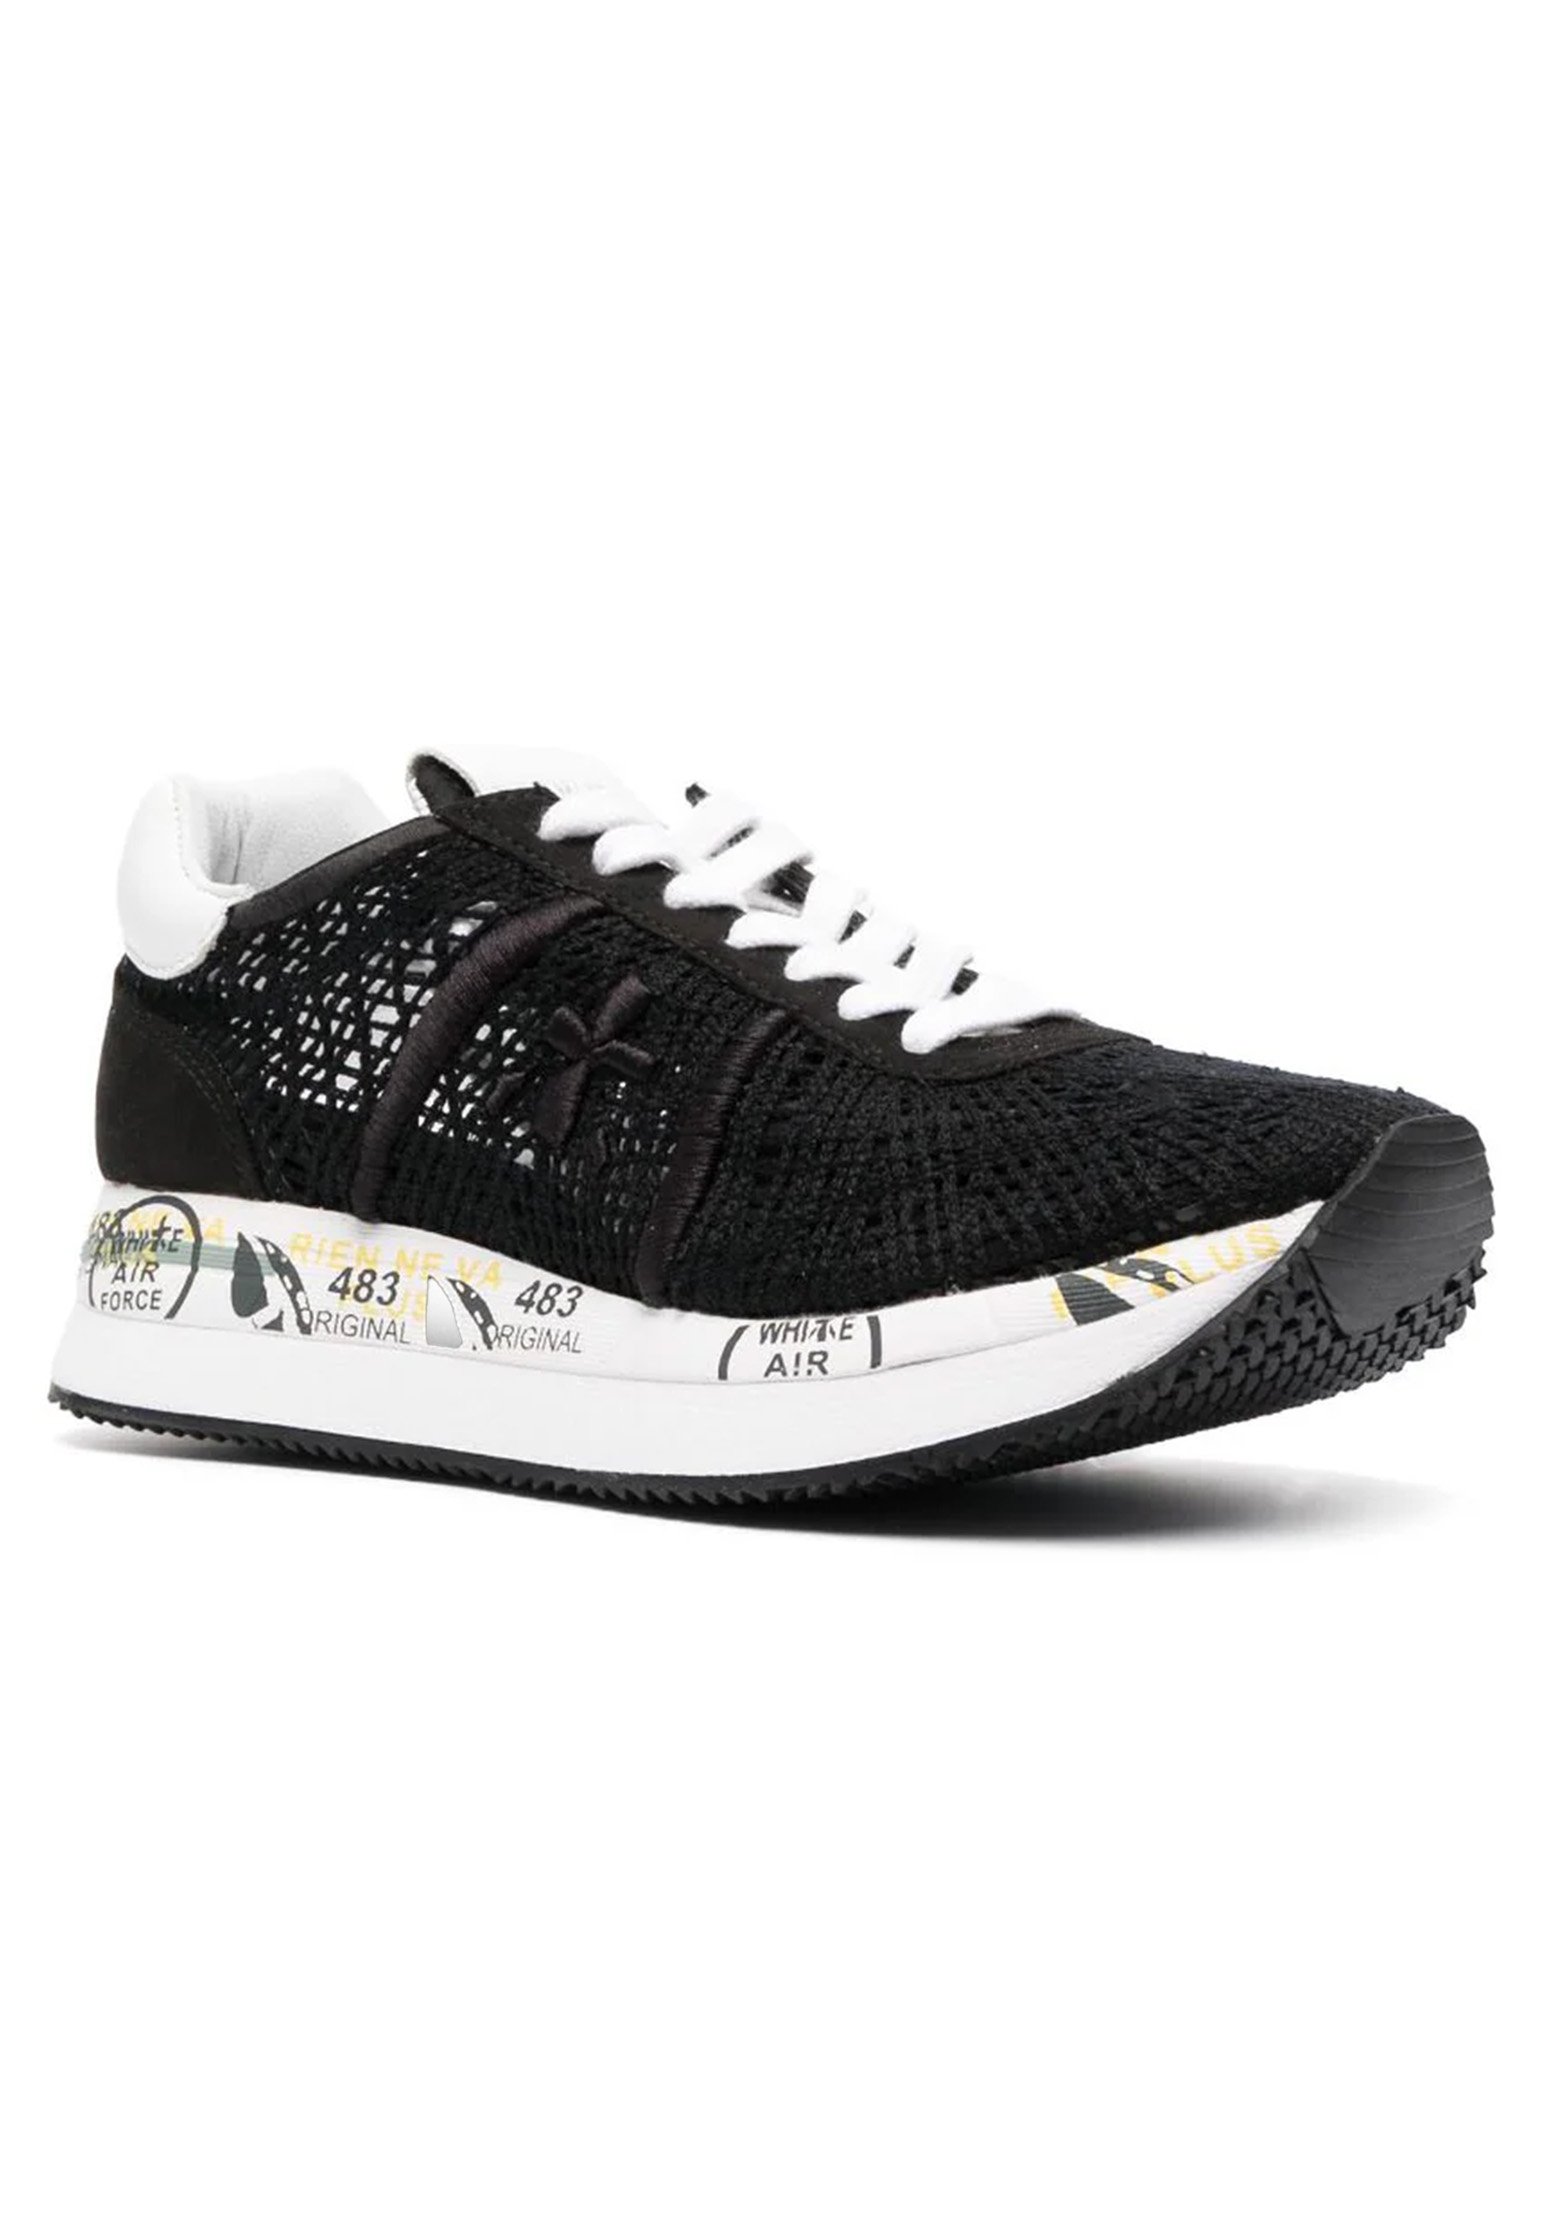 Sneakers PREMIATA Color: black (Code: 4194) in online store Allure